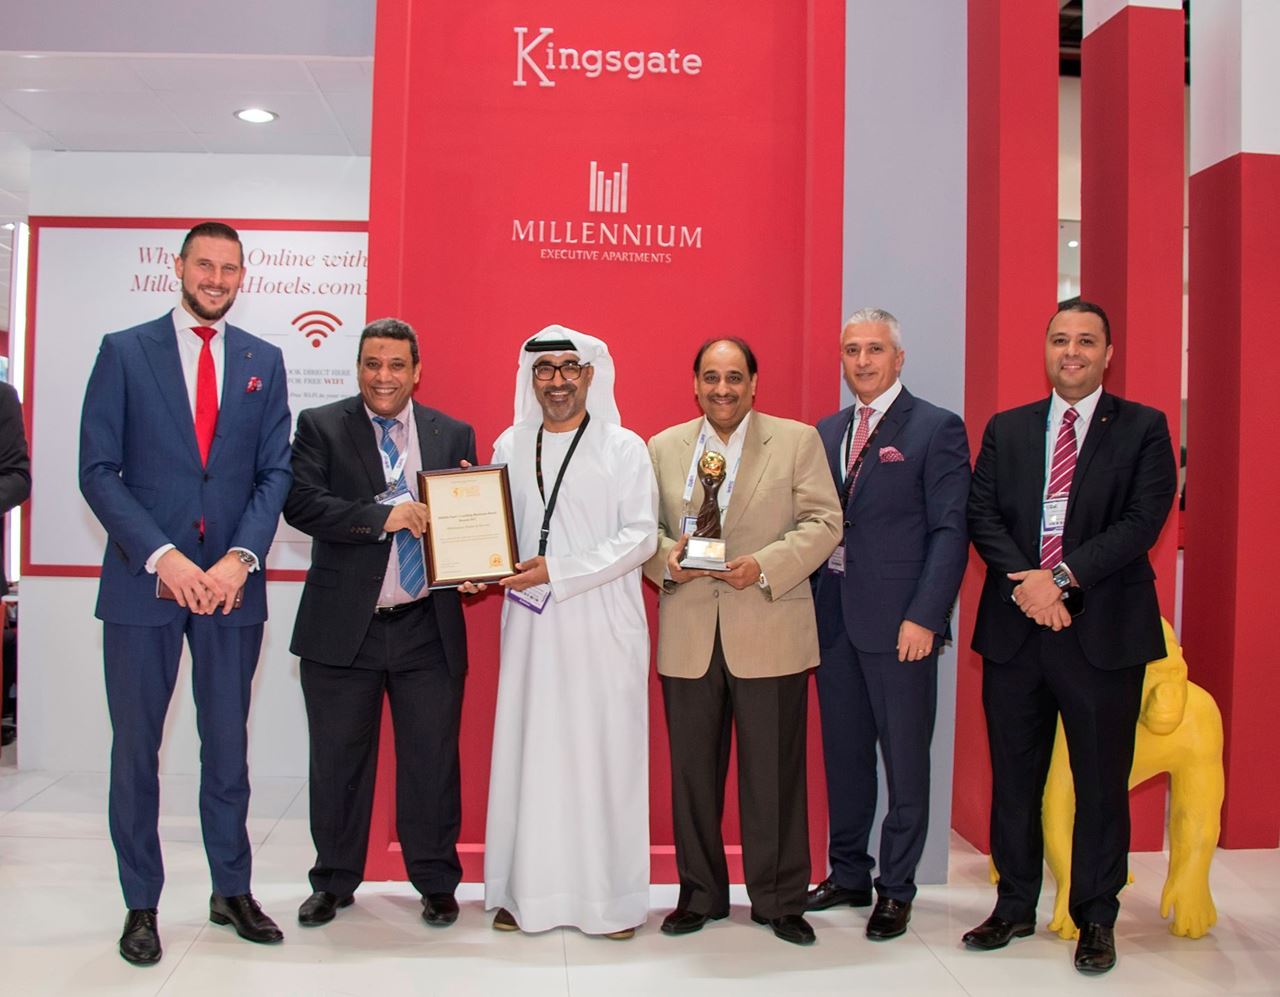 Makkah Millennium Hotel & Towers wins “Makkah’s Leading Hotel 2018” at the World Travel Awards